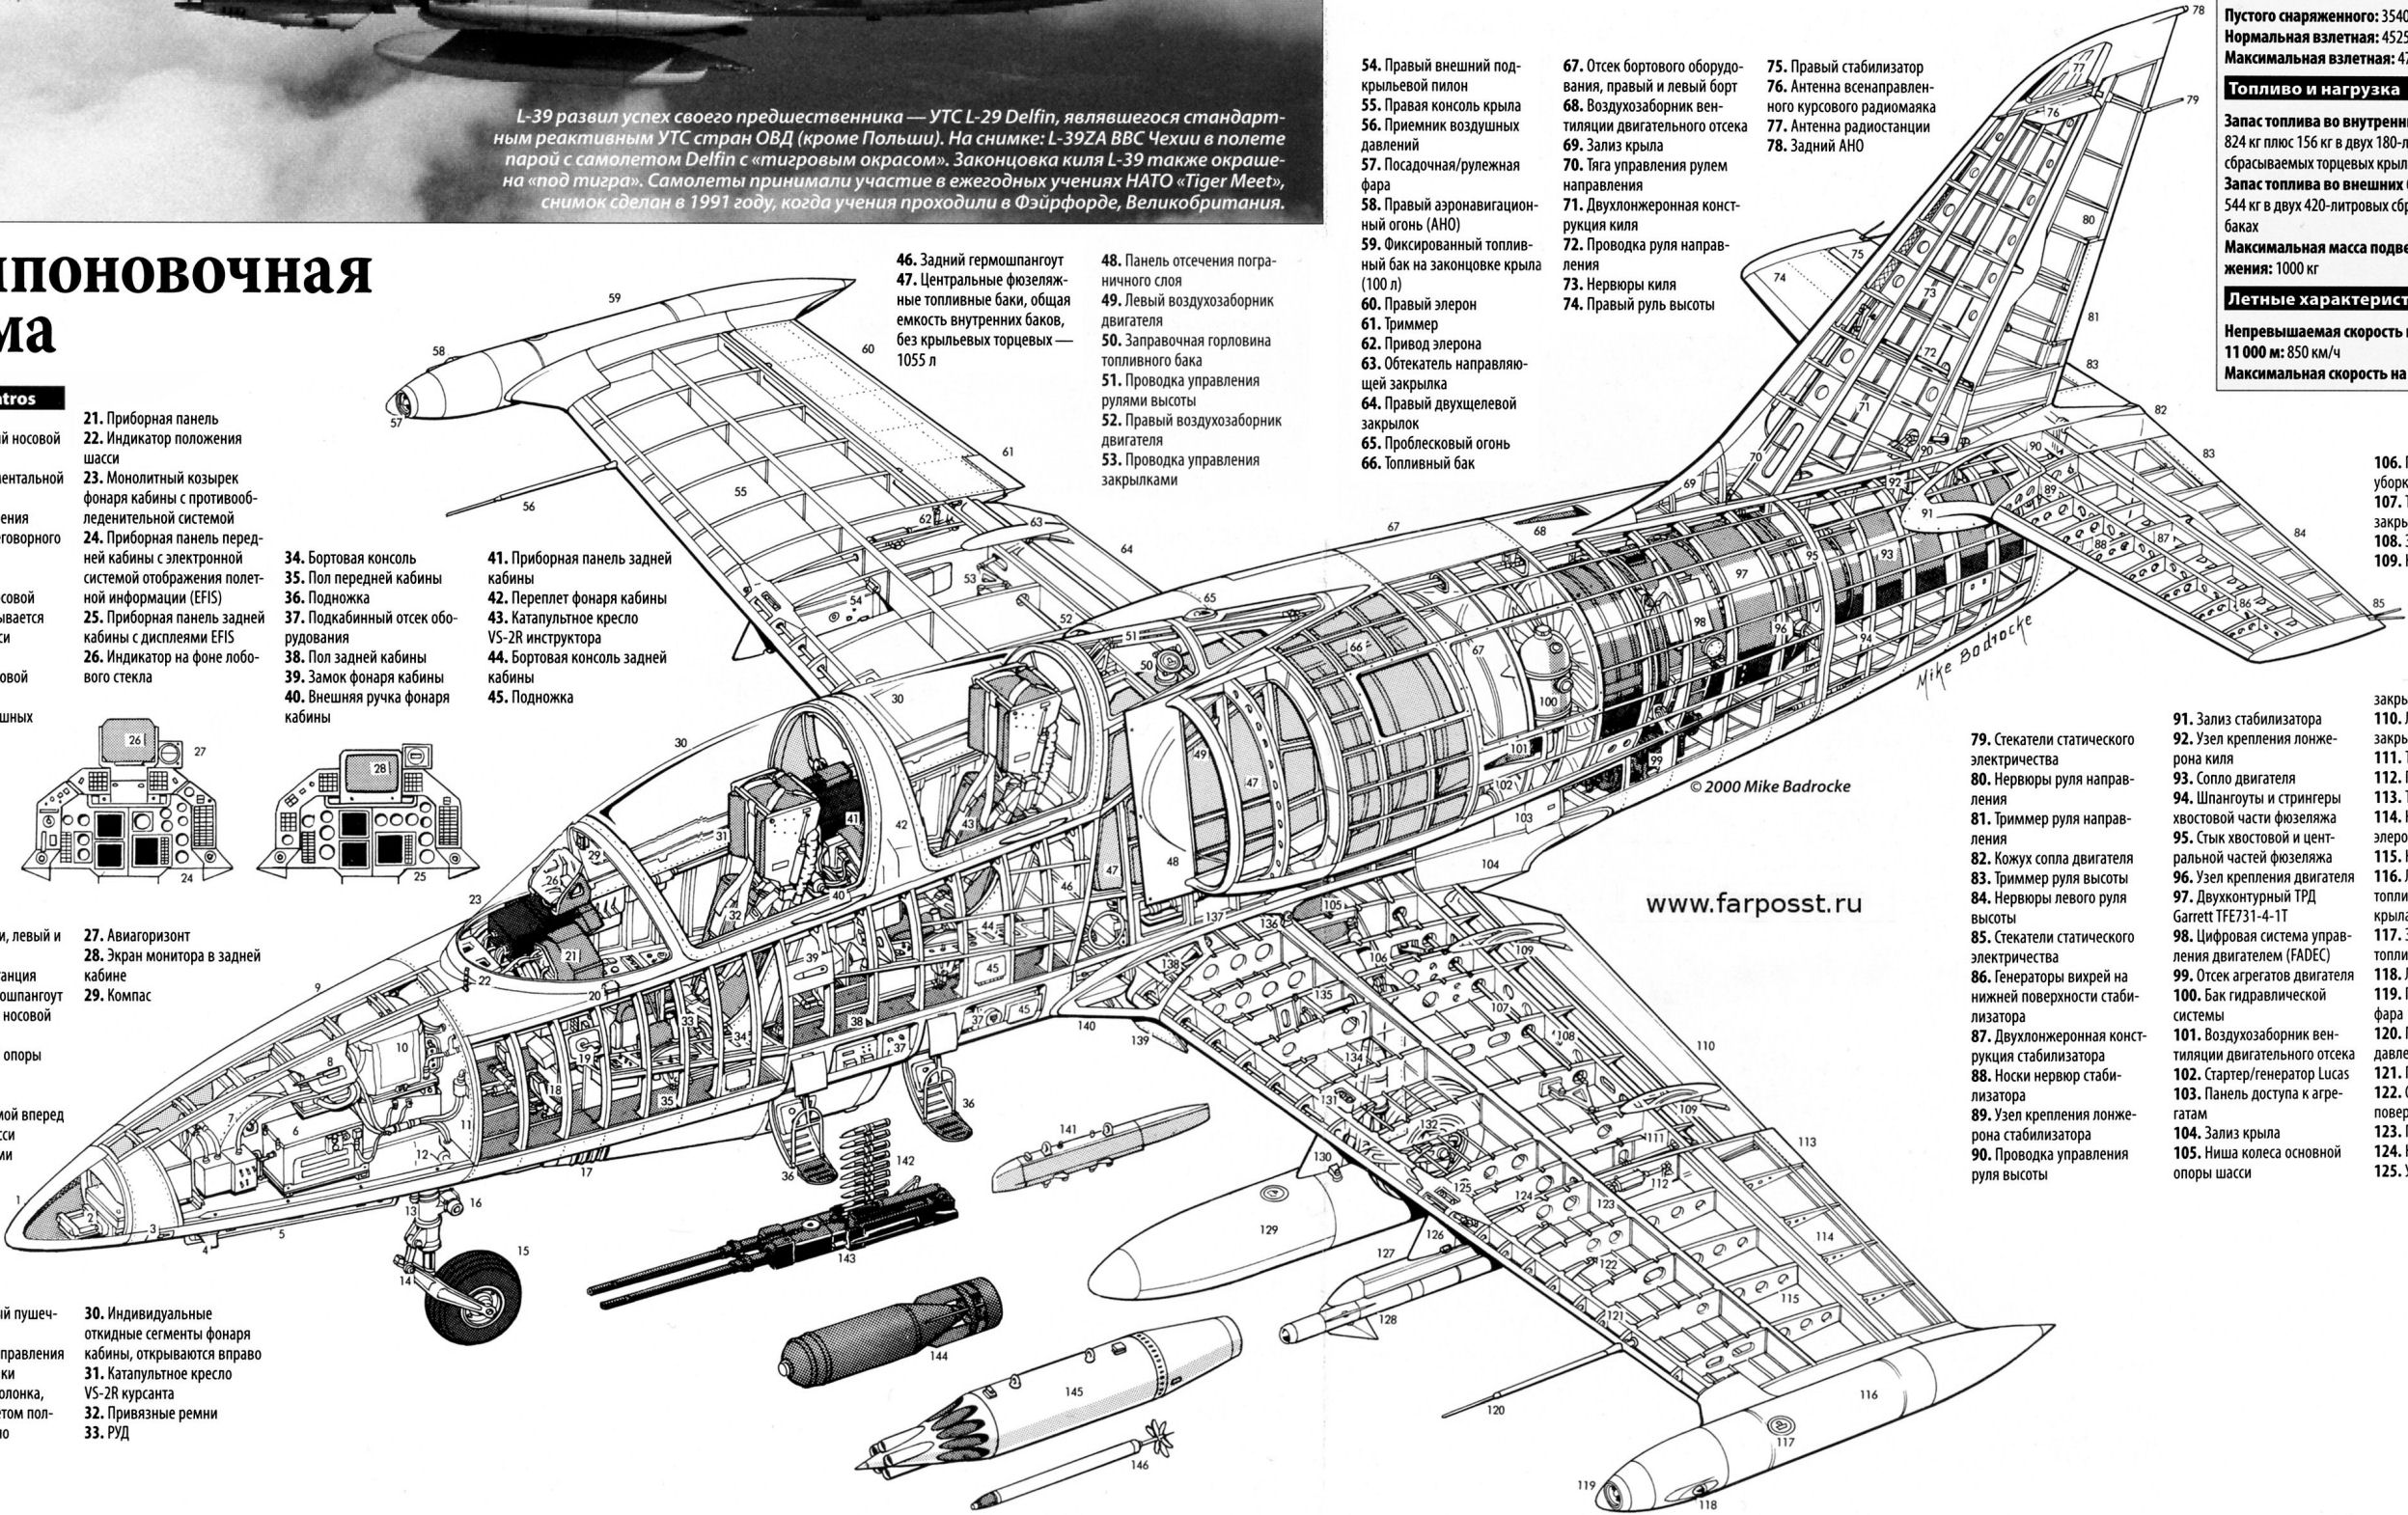 Aero L-39 Albatross (2).jpg